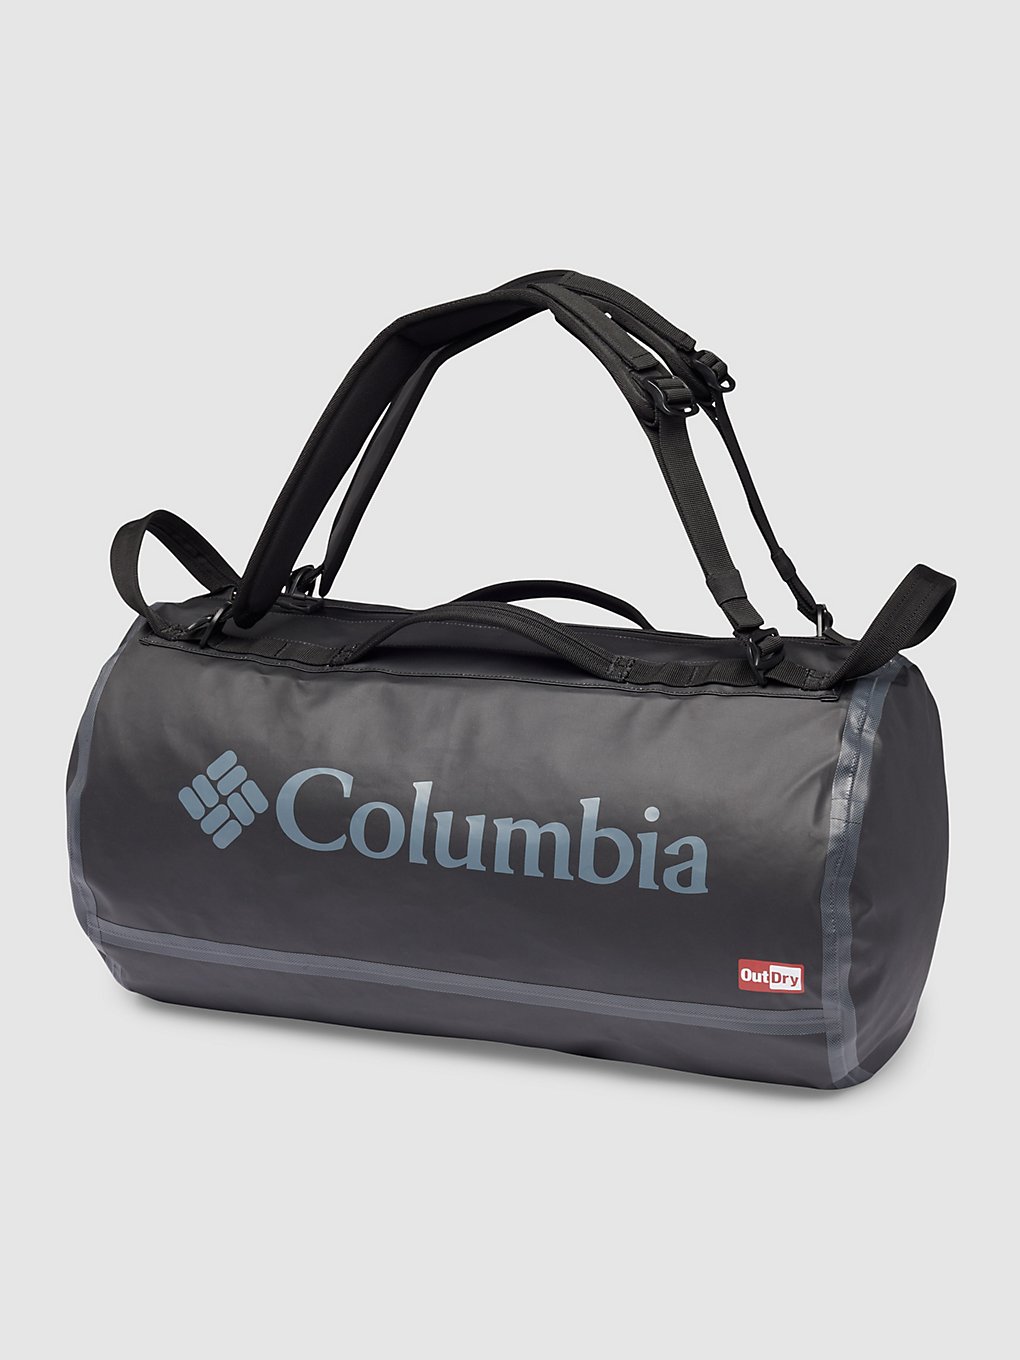 Columbia Out Dry Ex 40L Duffle Reisetasche black kaufen